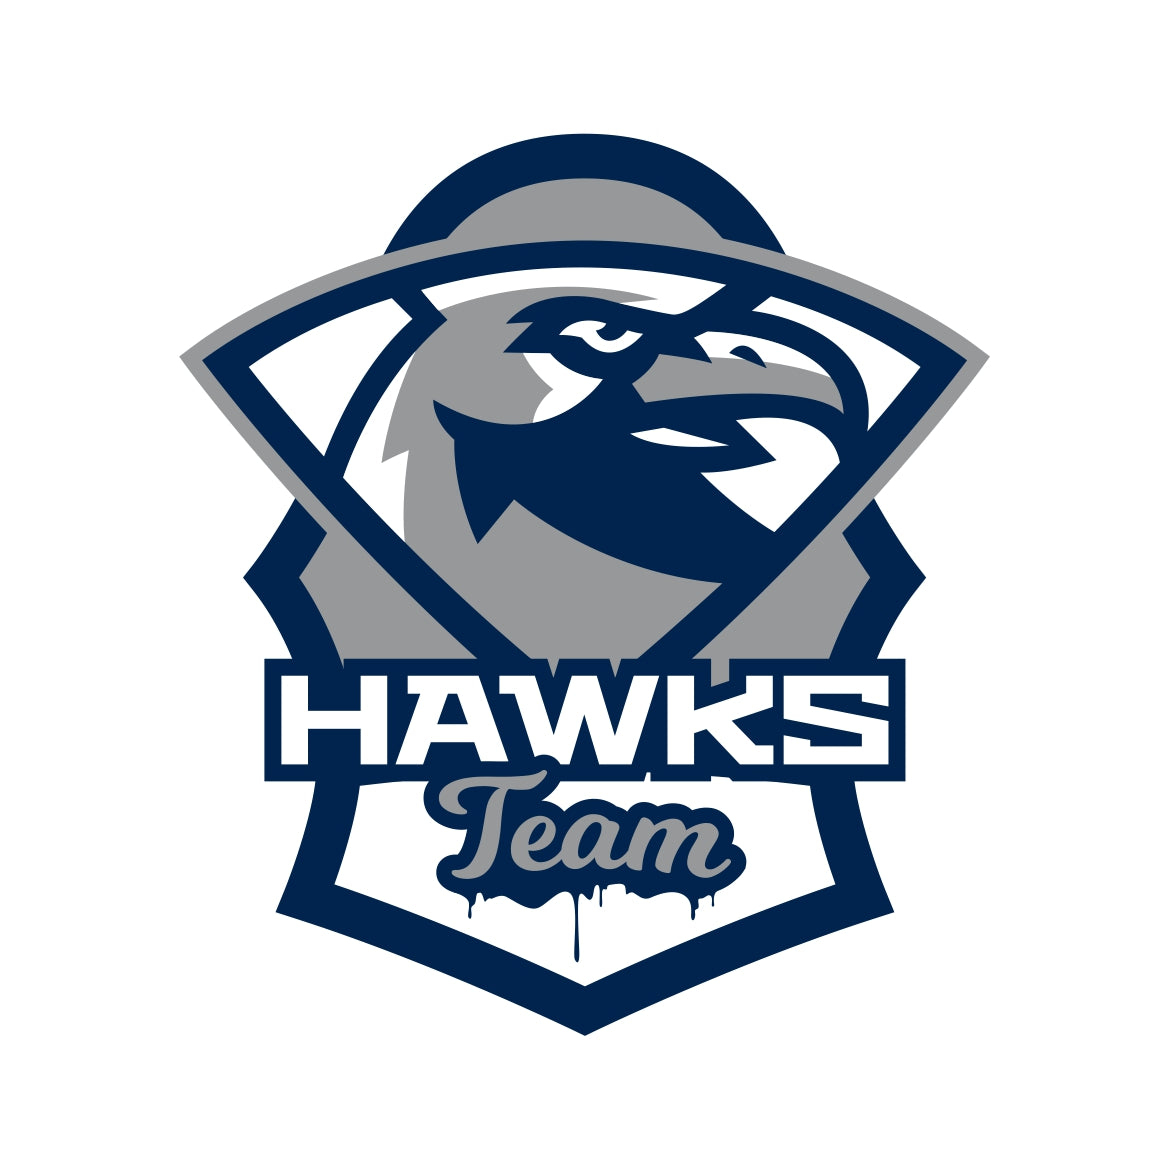 Hawks Team Decal